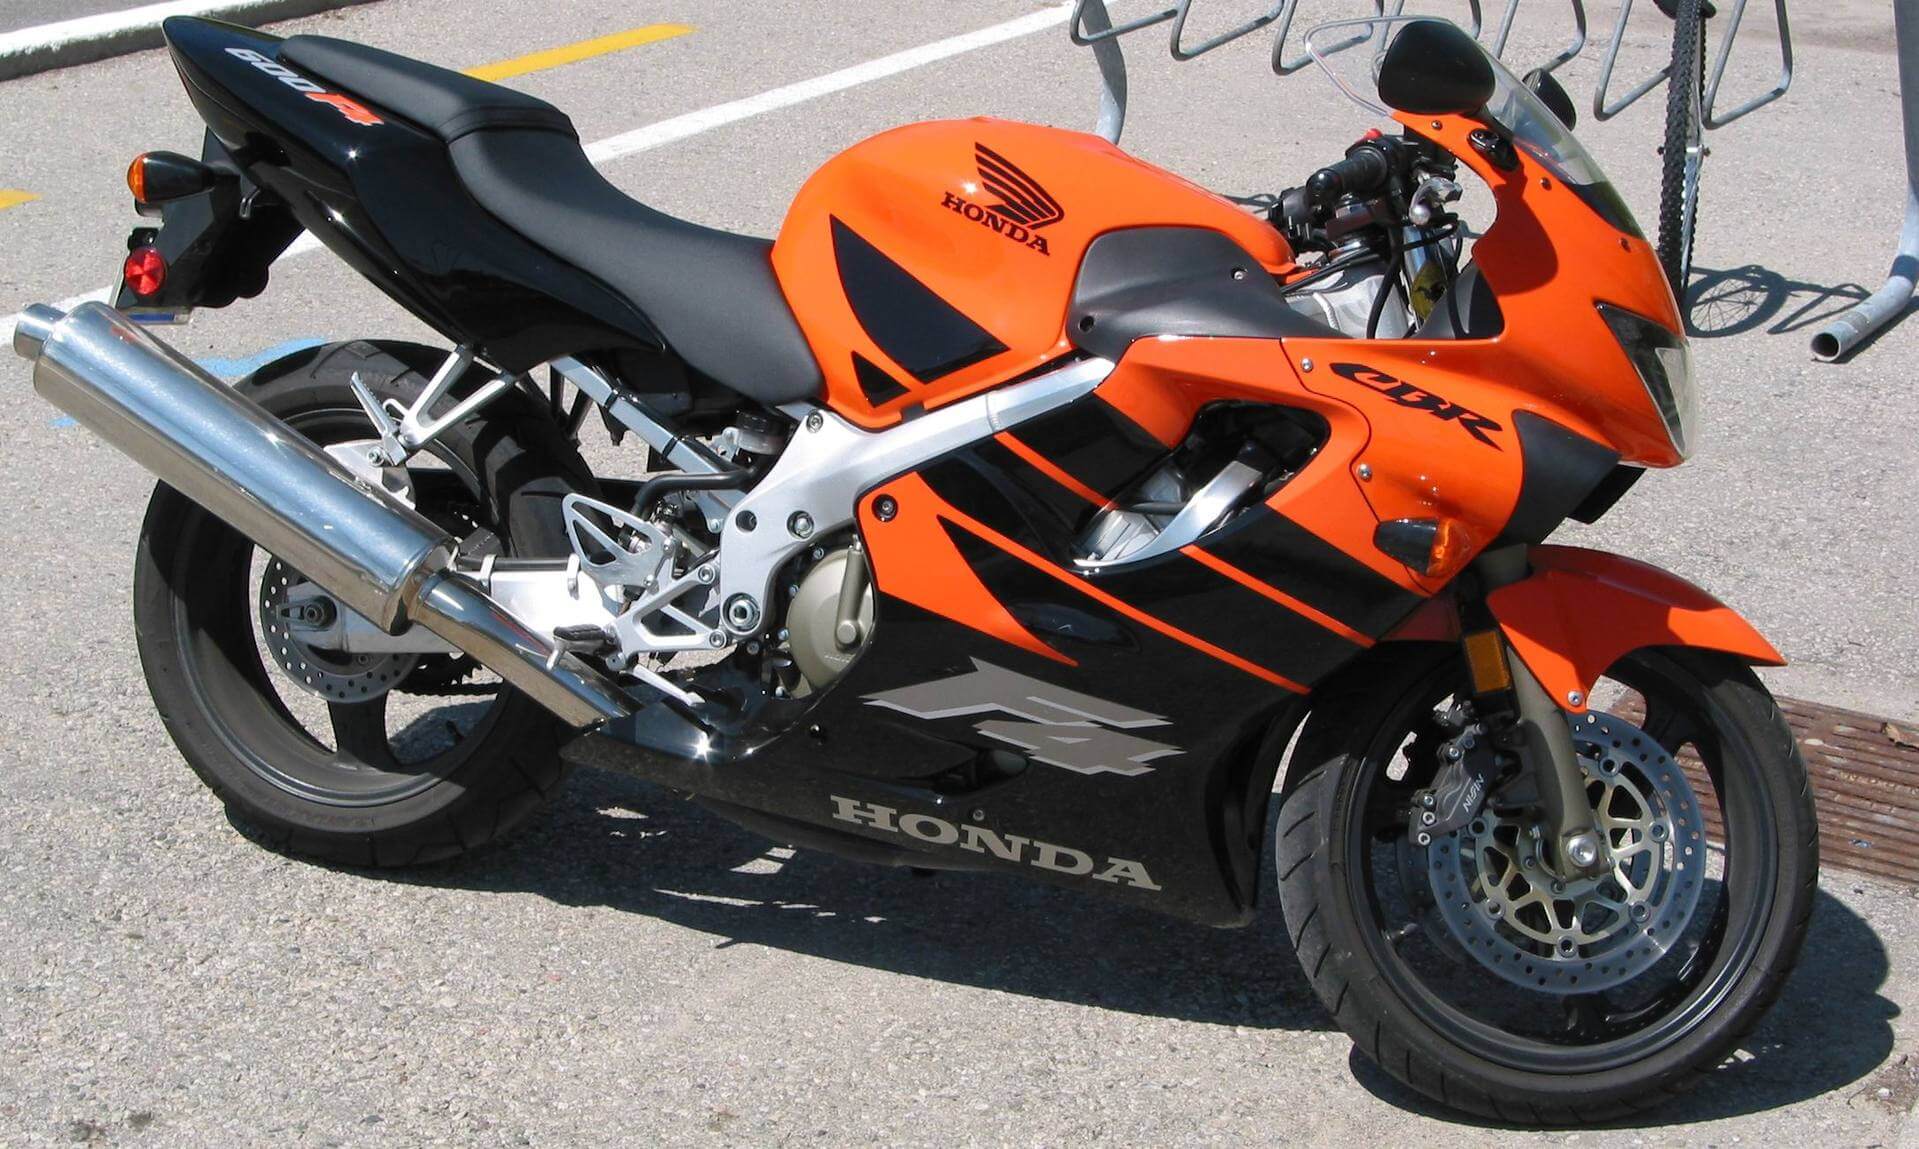 orange-honda-motorcycle-2-1479790-1919x1148 (1)